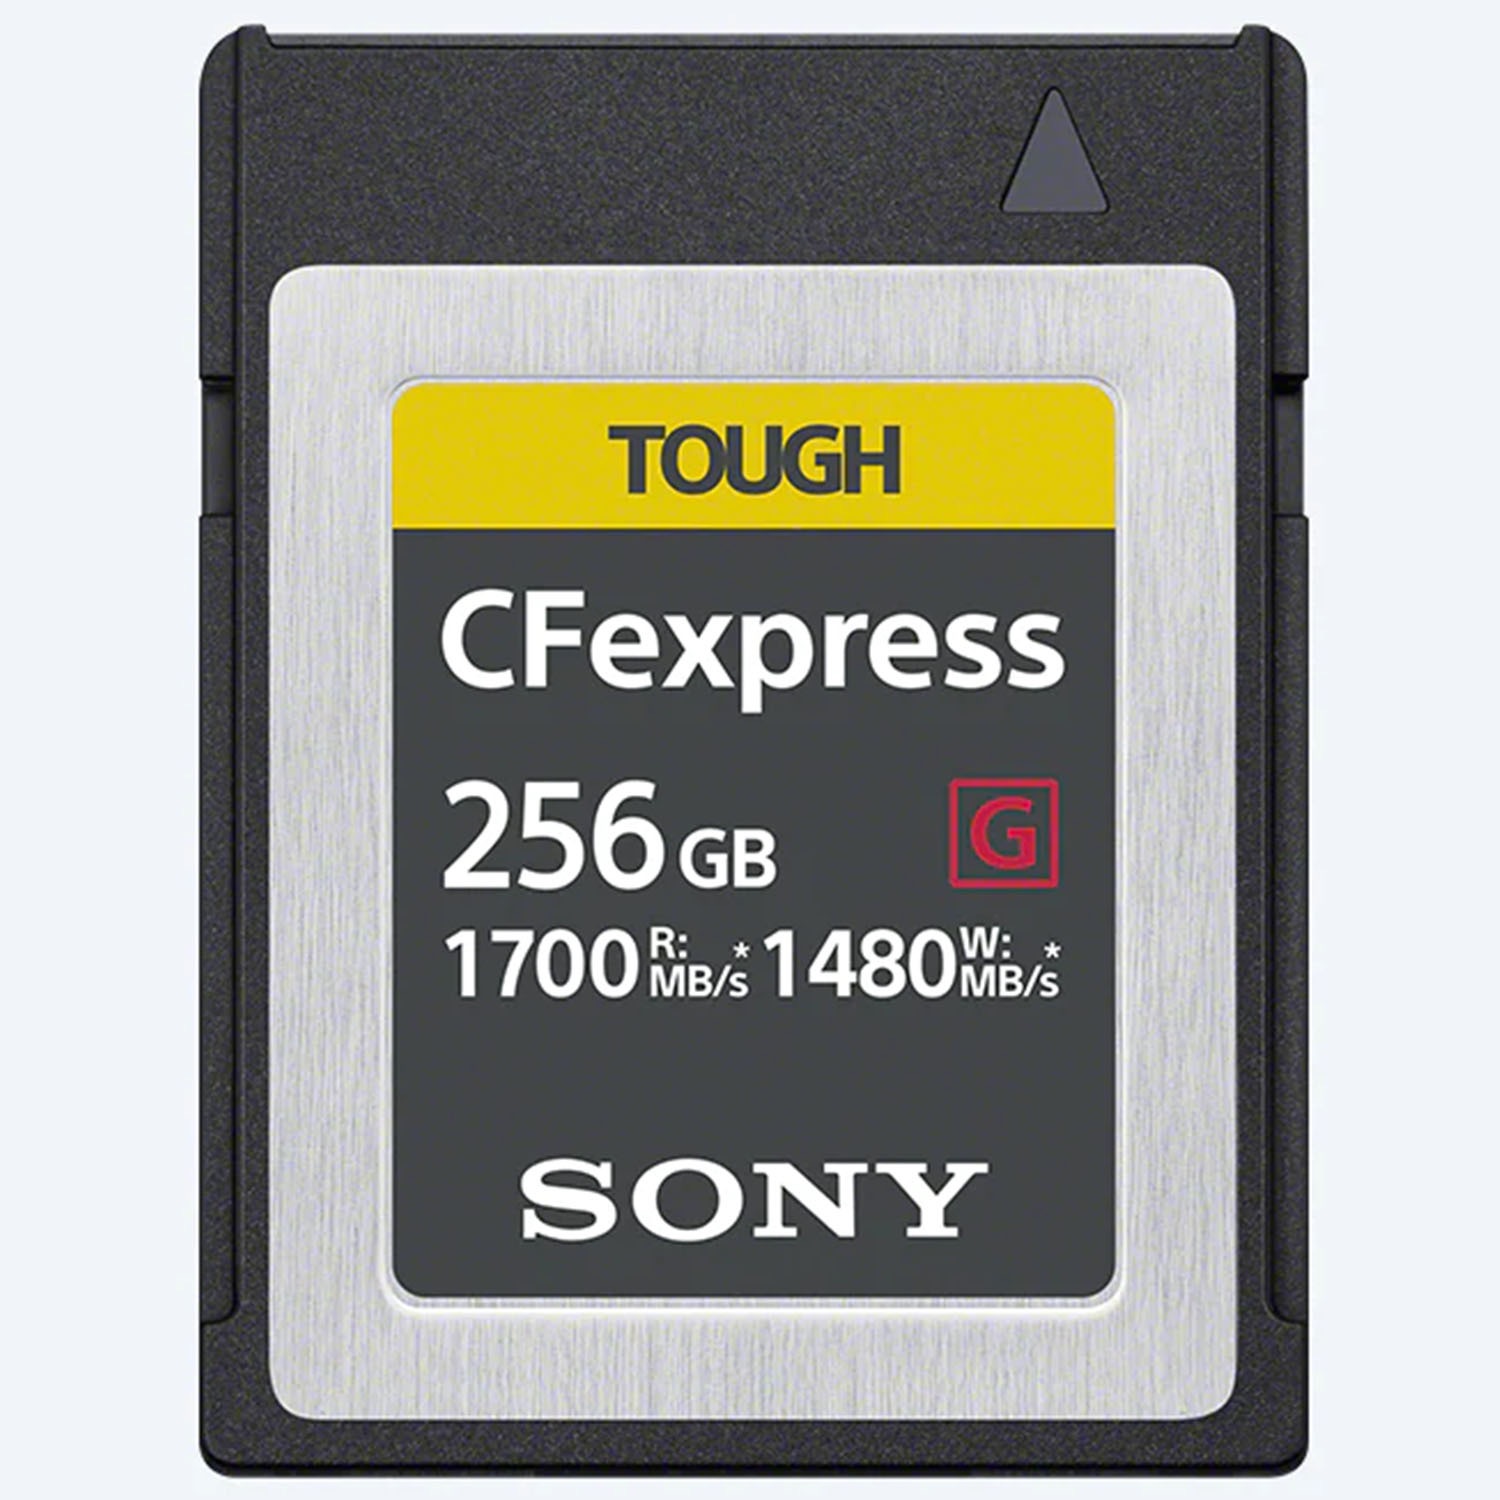 Sony CF Express Tough Card